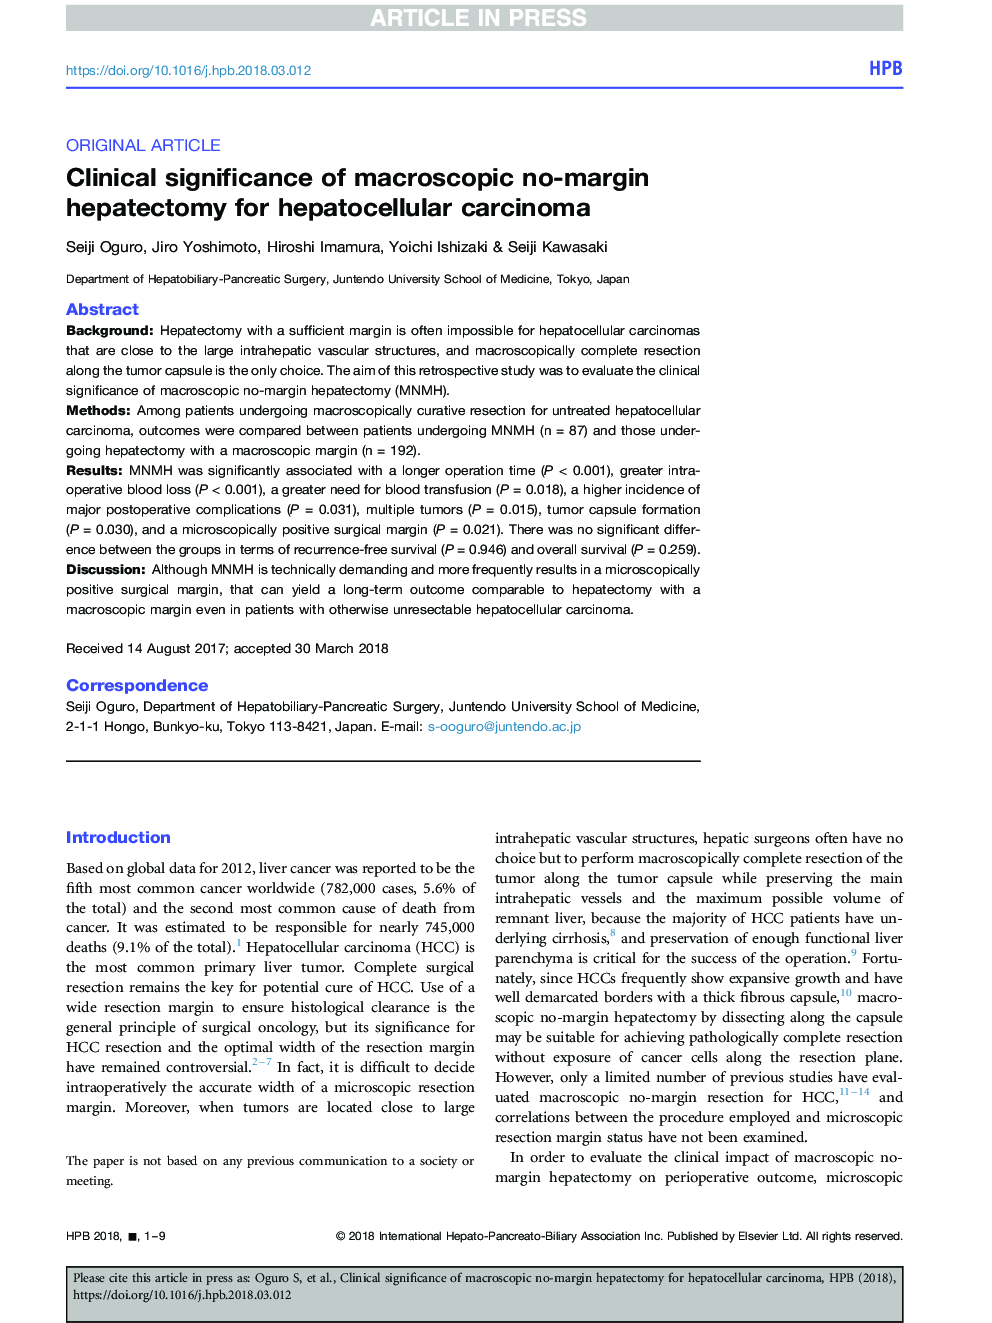 اهمیت بالینی ناپایداری ماکروسکوپی ناپایدار برای کارسینوم هپاتوسلولار